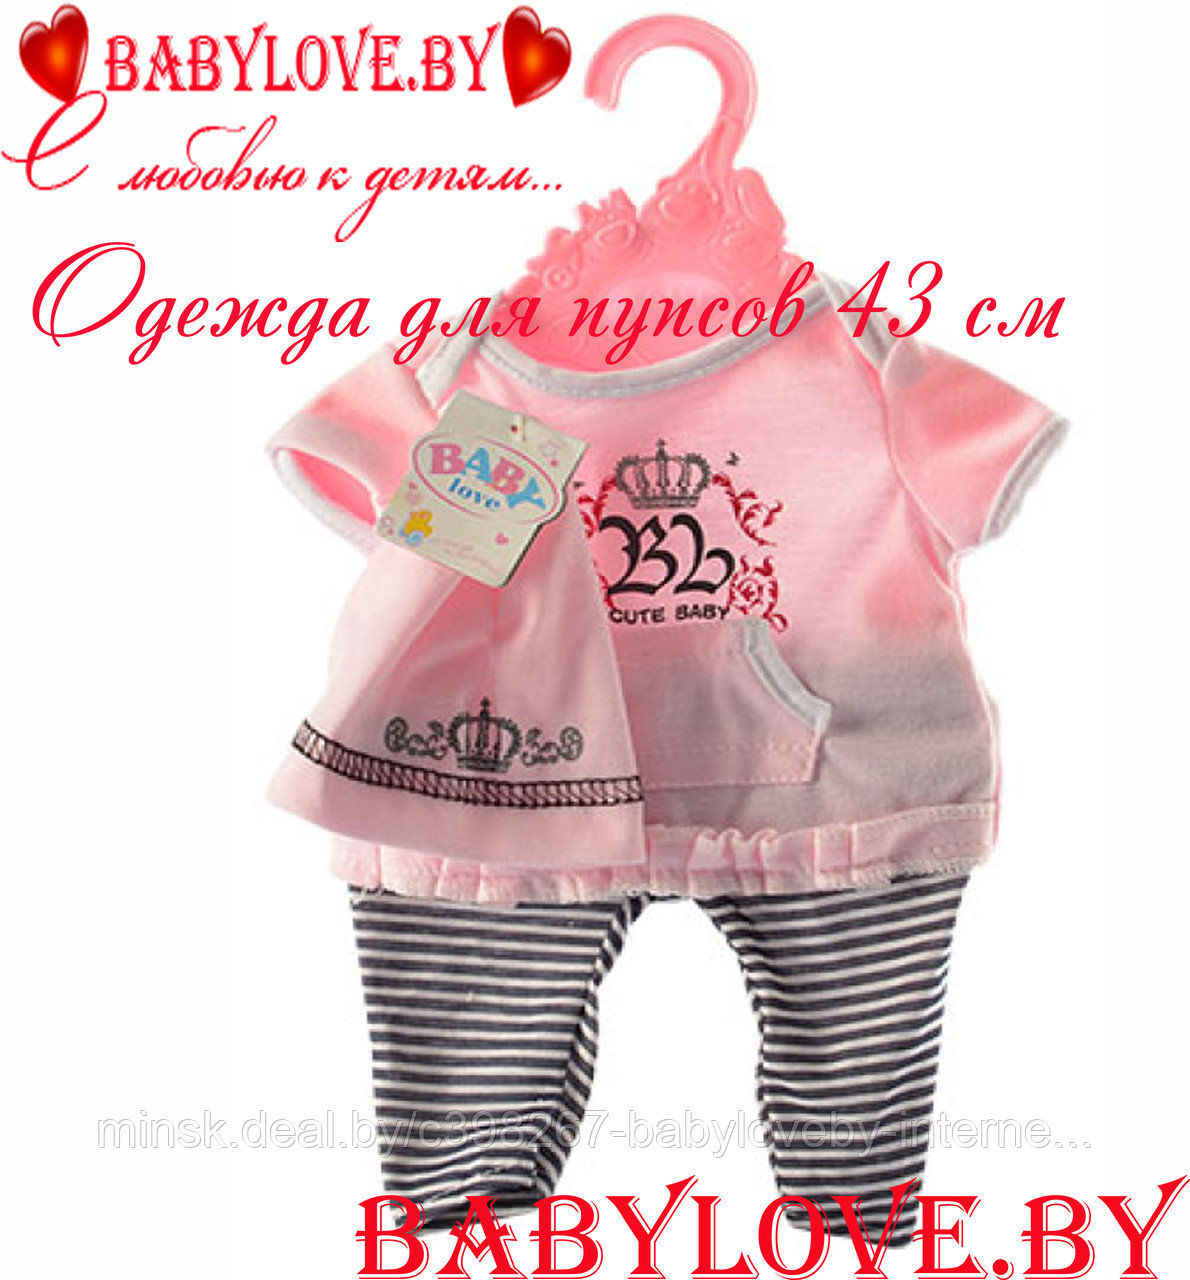 Одежда для кукол пупсов 42-43 см в ассортименте (baby doll, baby love, baby born,yale baby)